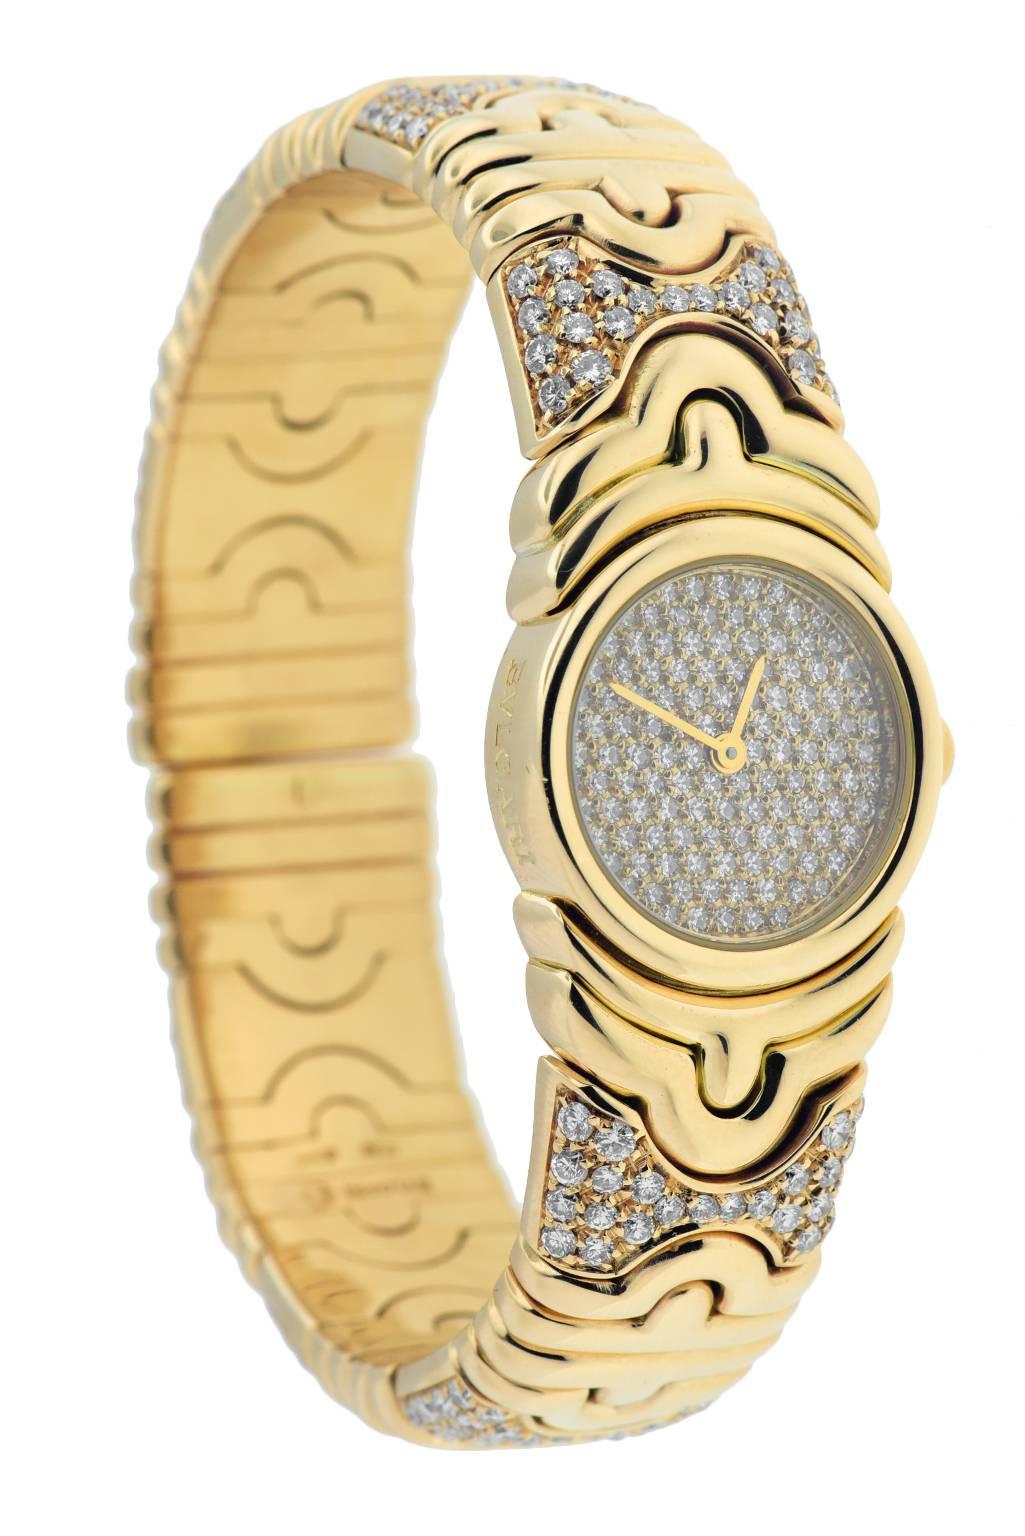 
Vintage Ladies Diamond Pave Bvlgari bangle watch from the iconic 